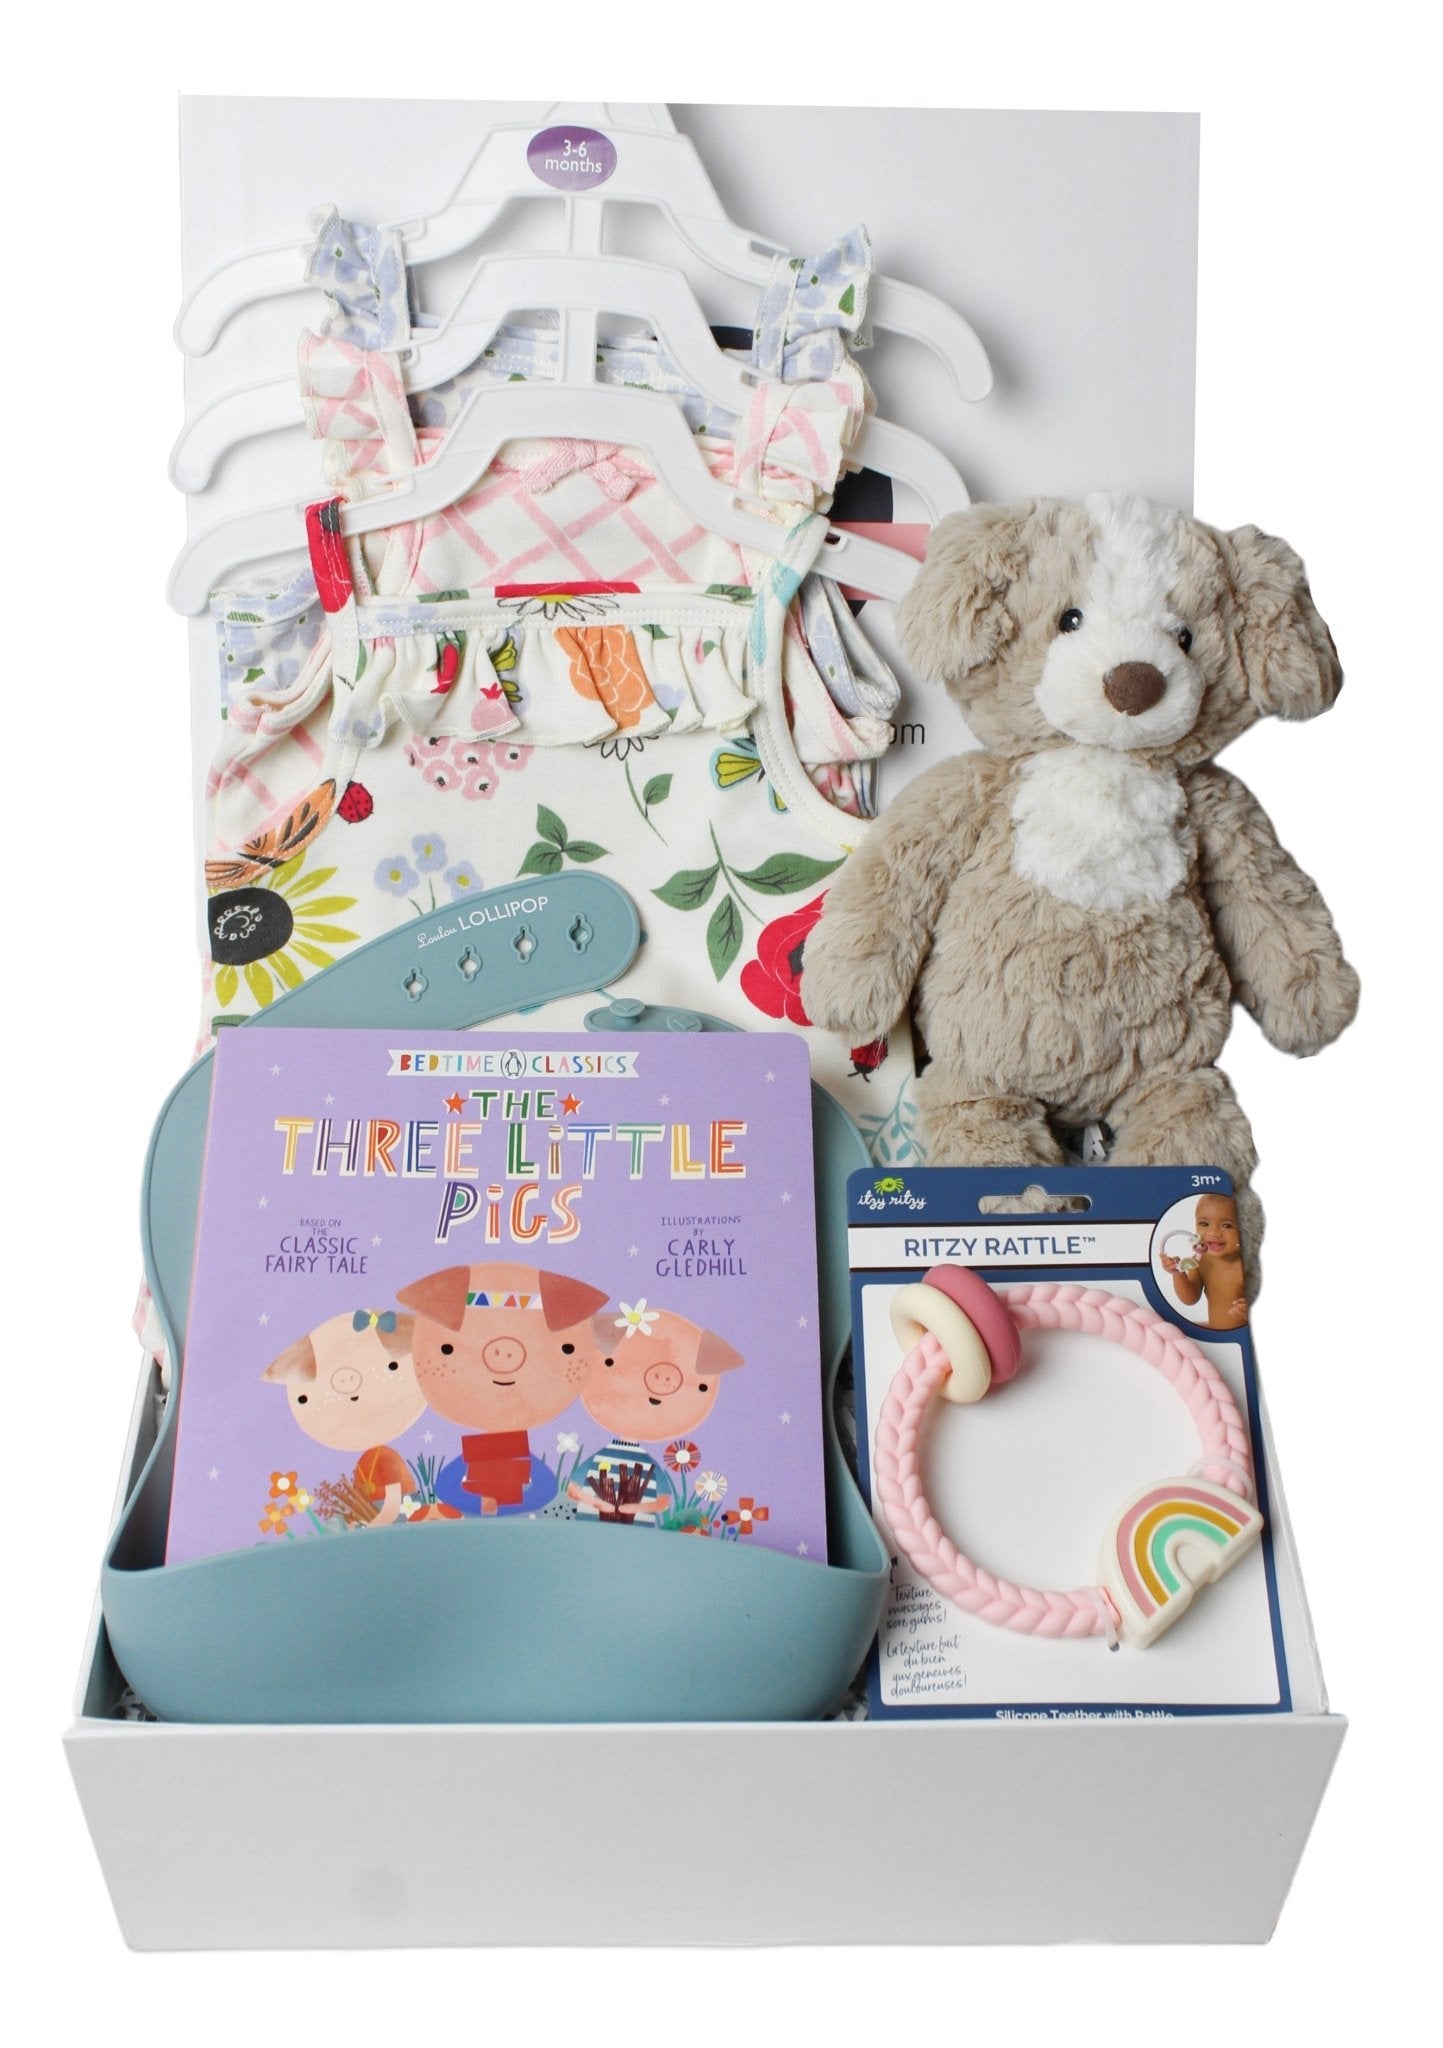 The Modern Baby Girl Gift Box